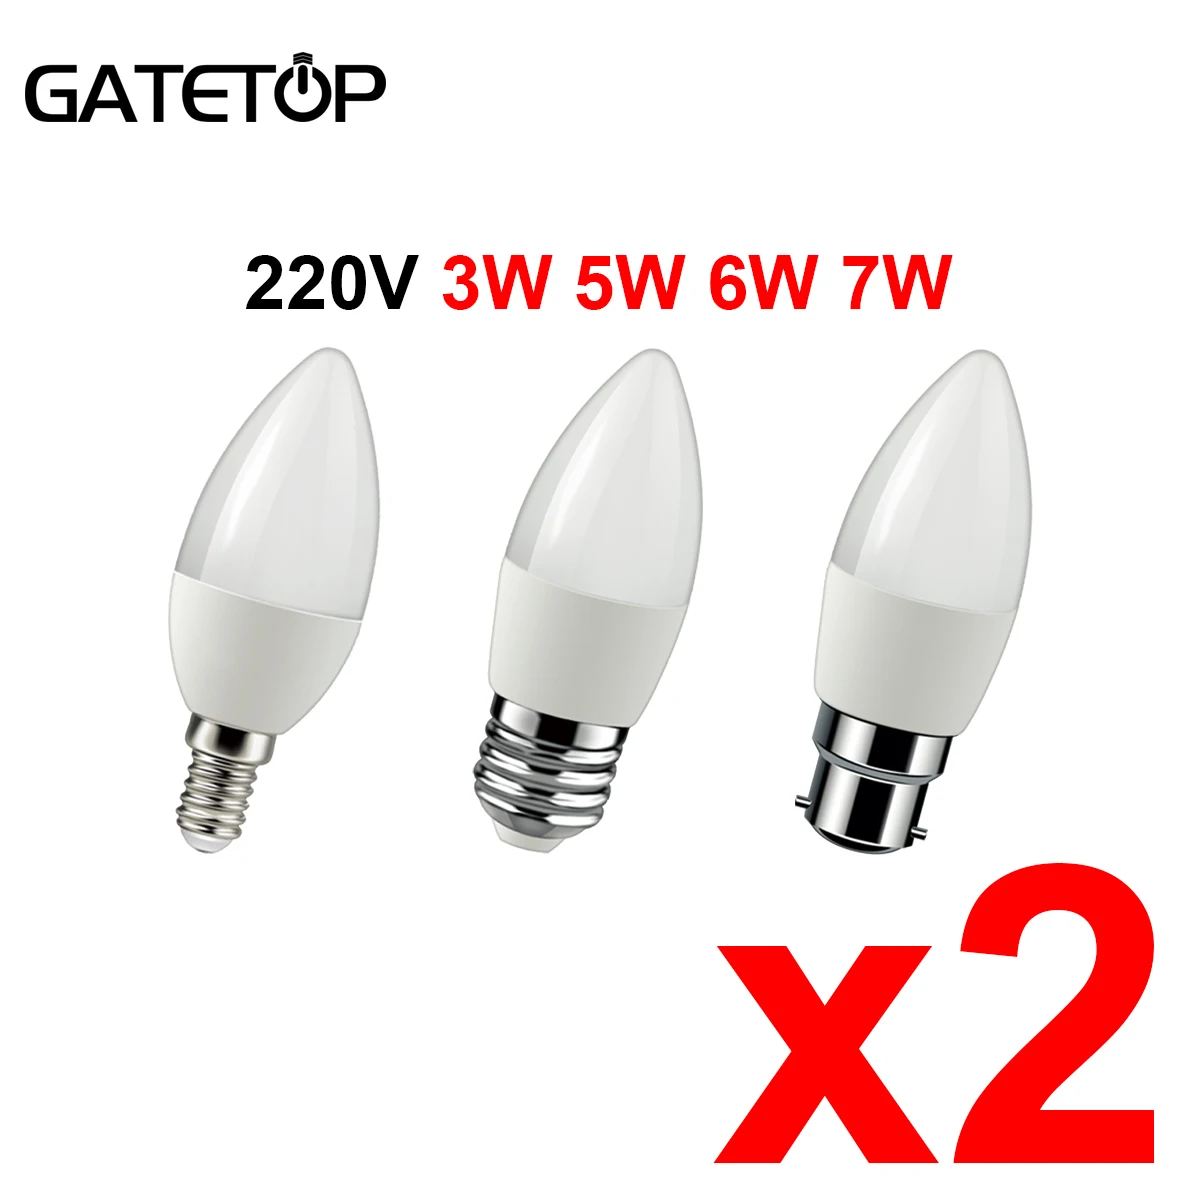 

2PCS Led Candle Bulb C37 3W 5W 6W 7W E27 B22 E14 220v-240v 3000K 4000K 6000k For Home Decoration Lamp